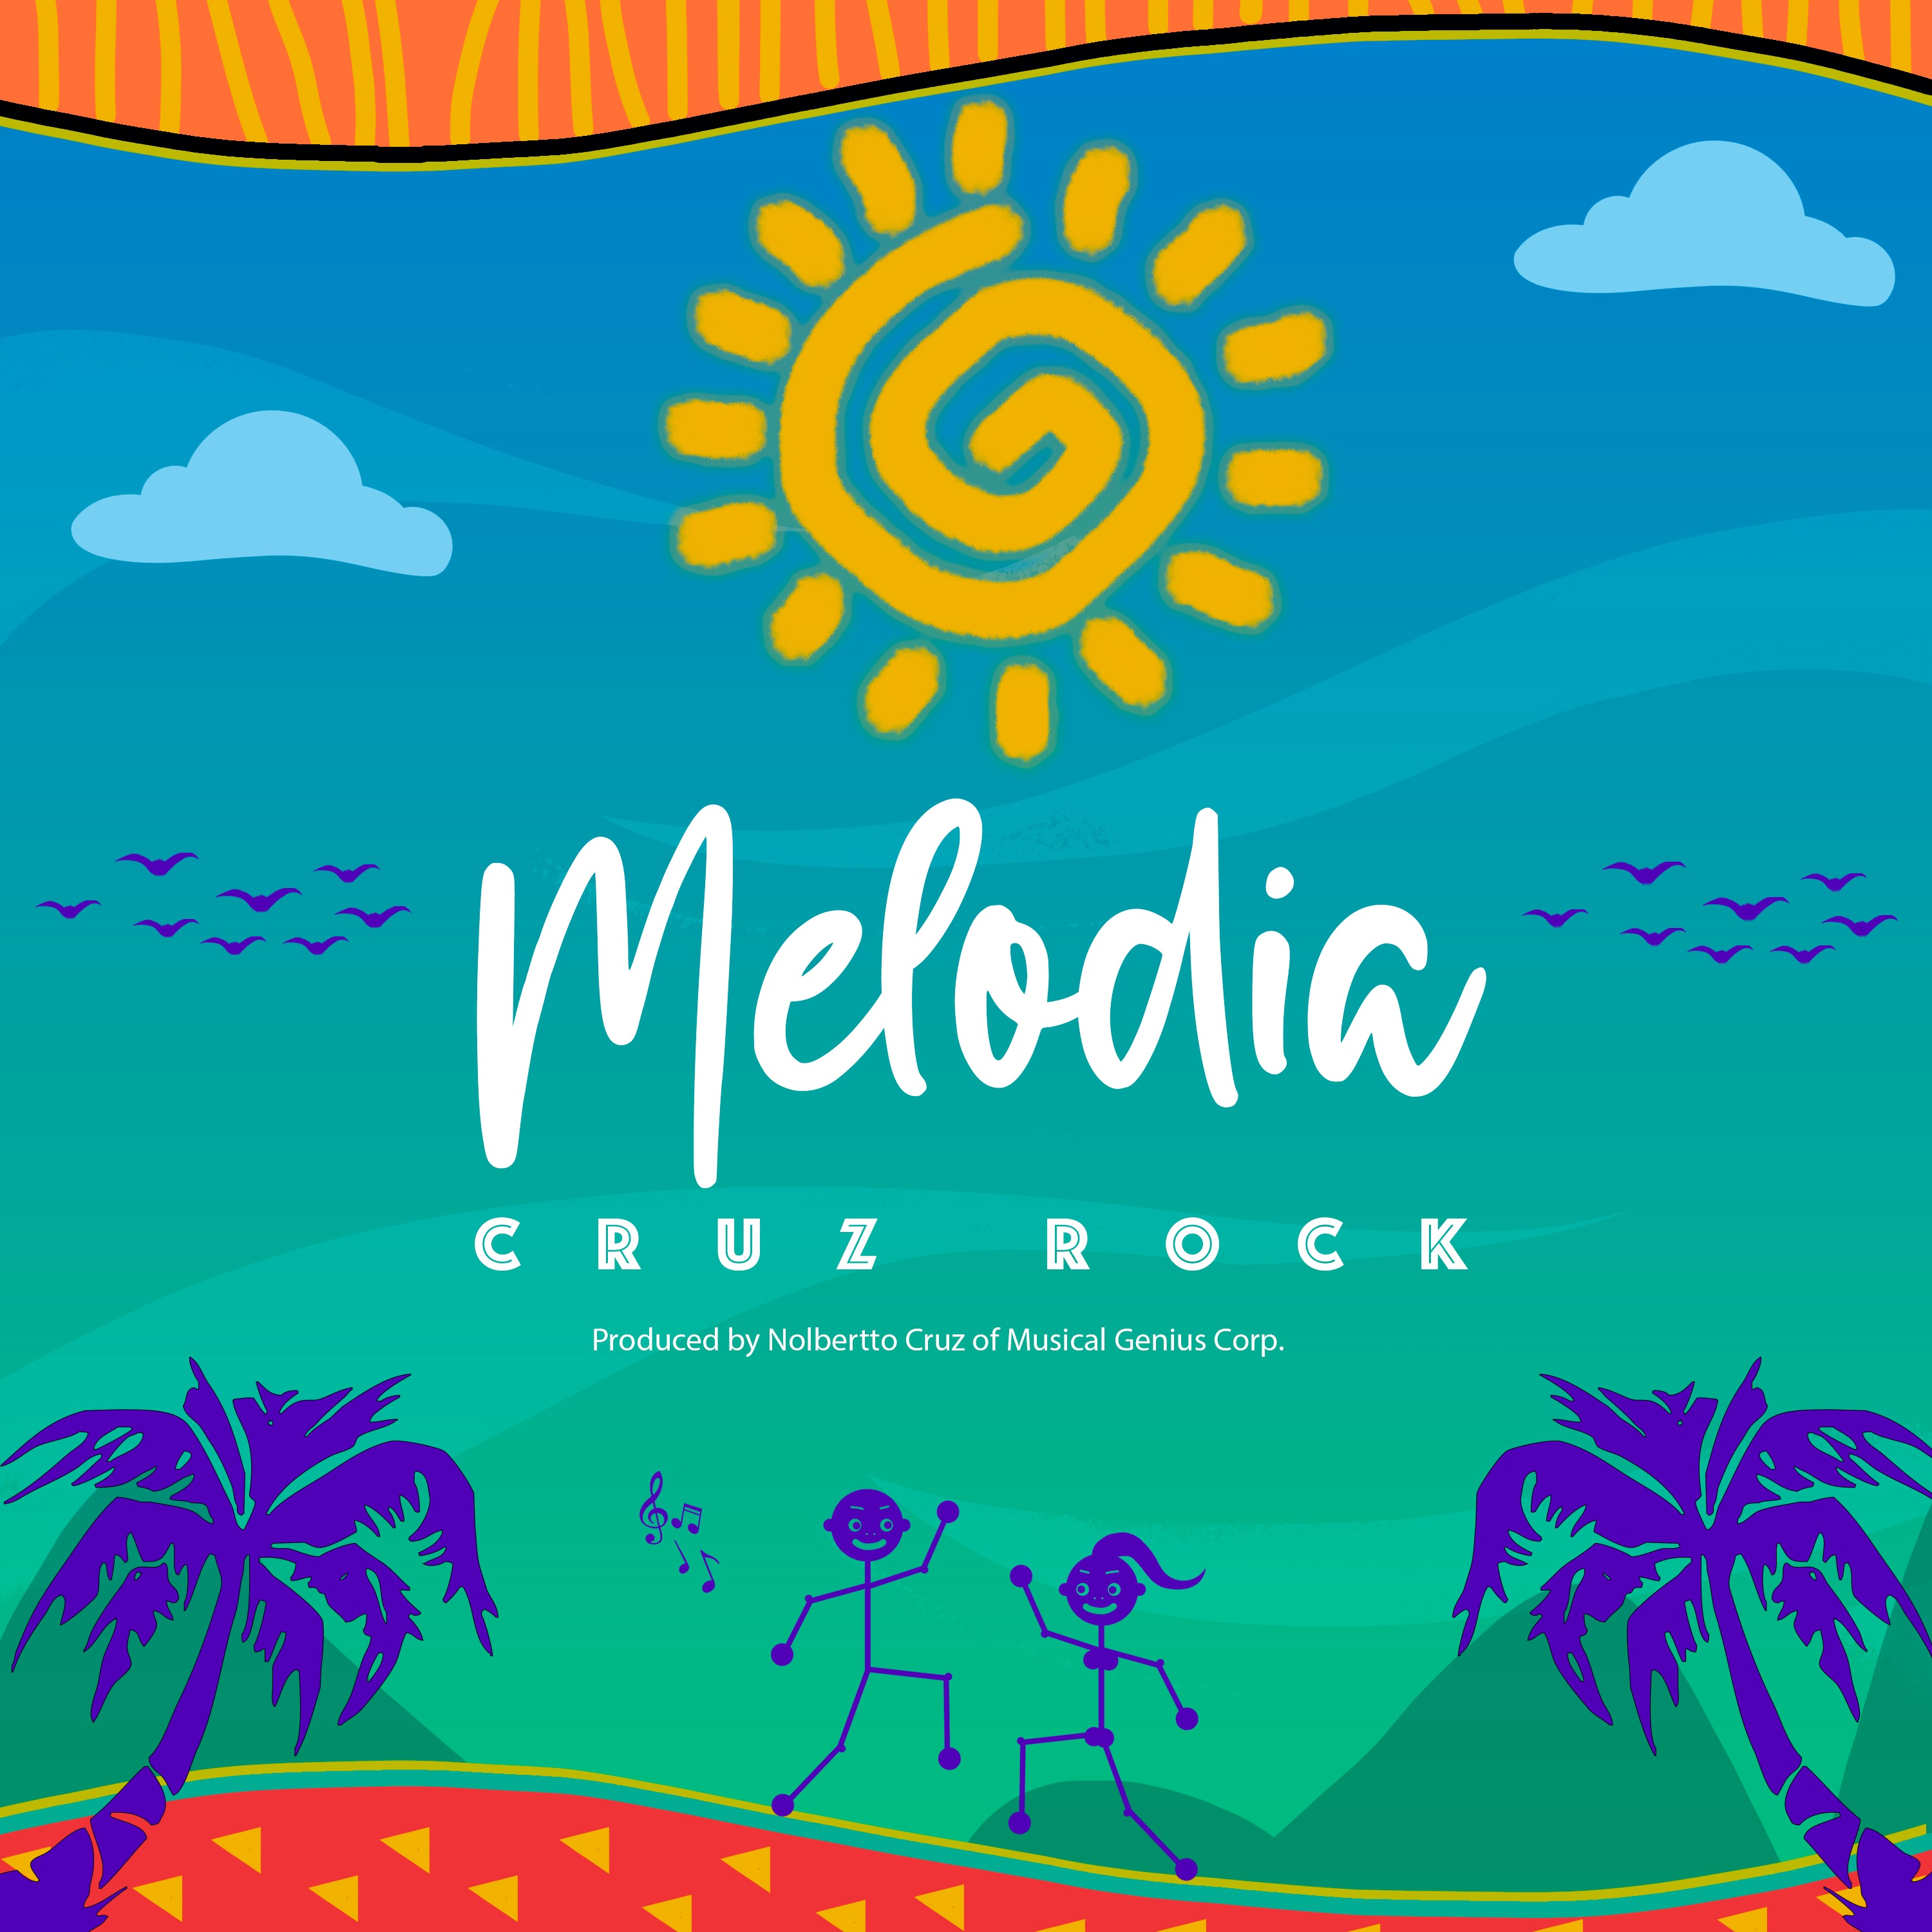 Download Melodia by Cruz Rock